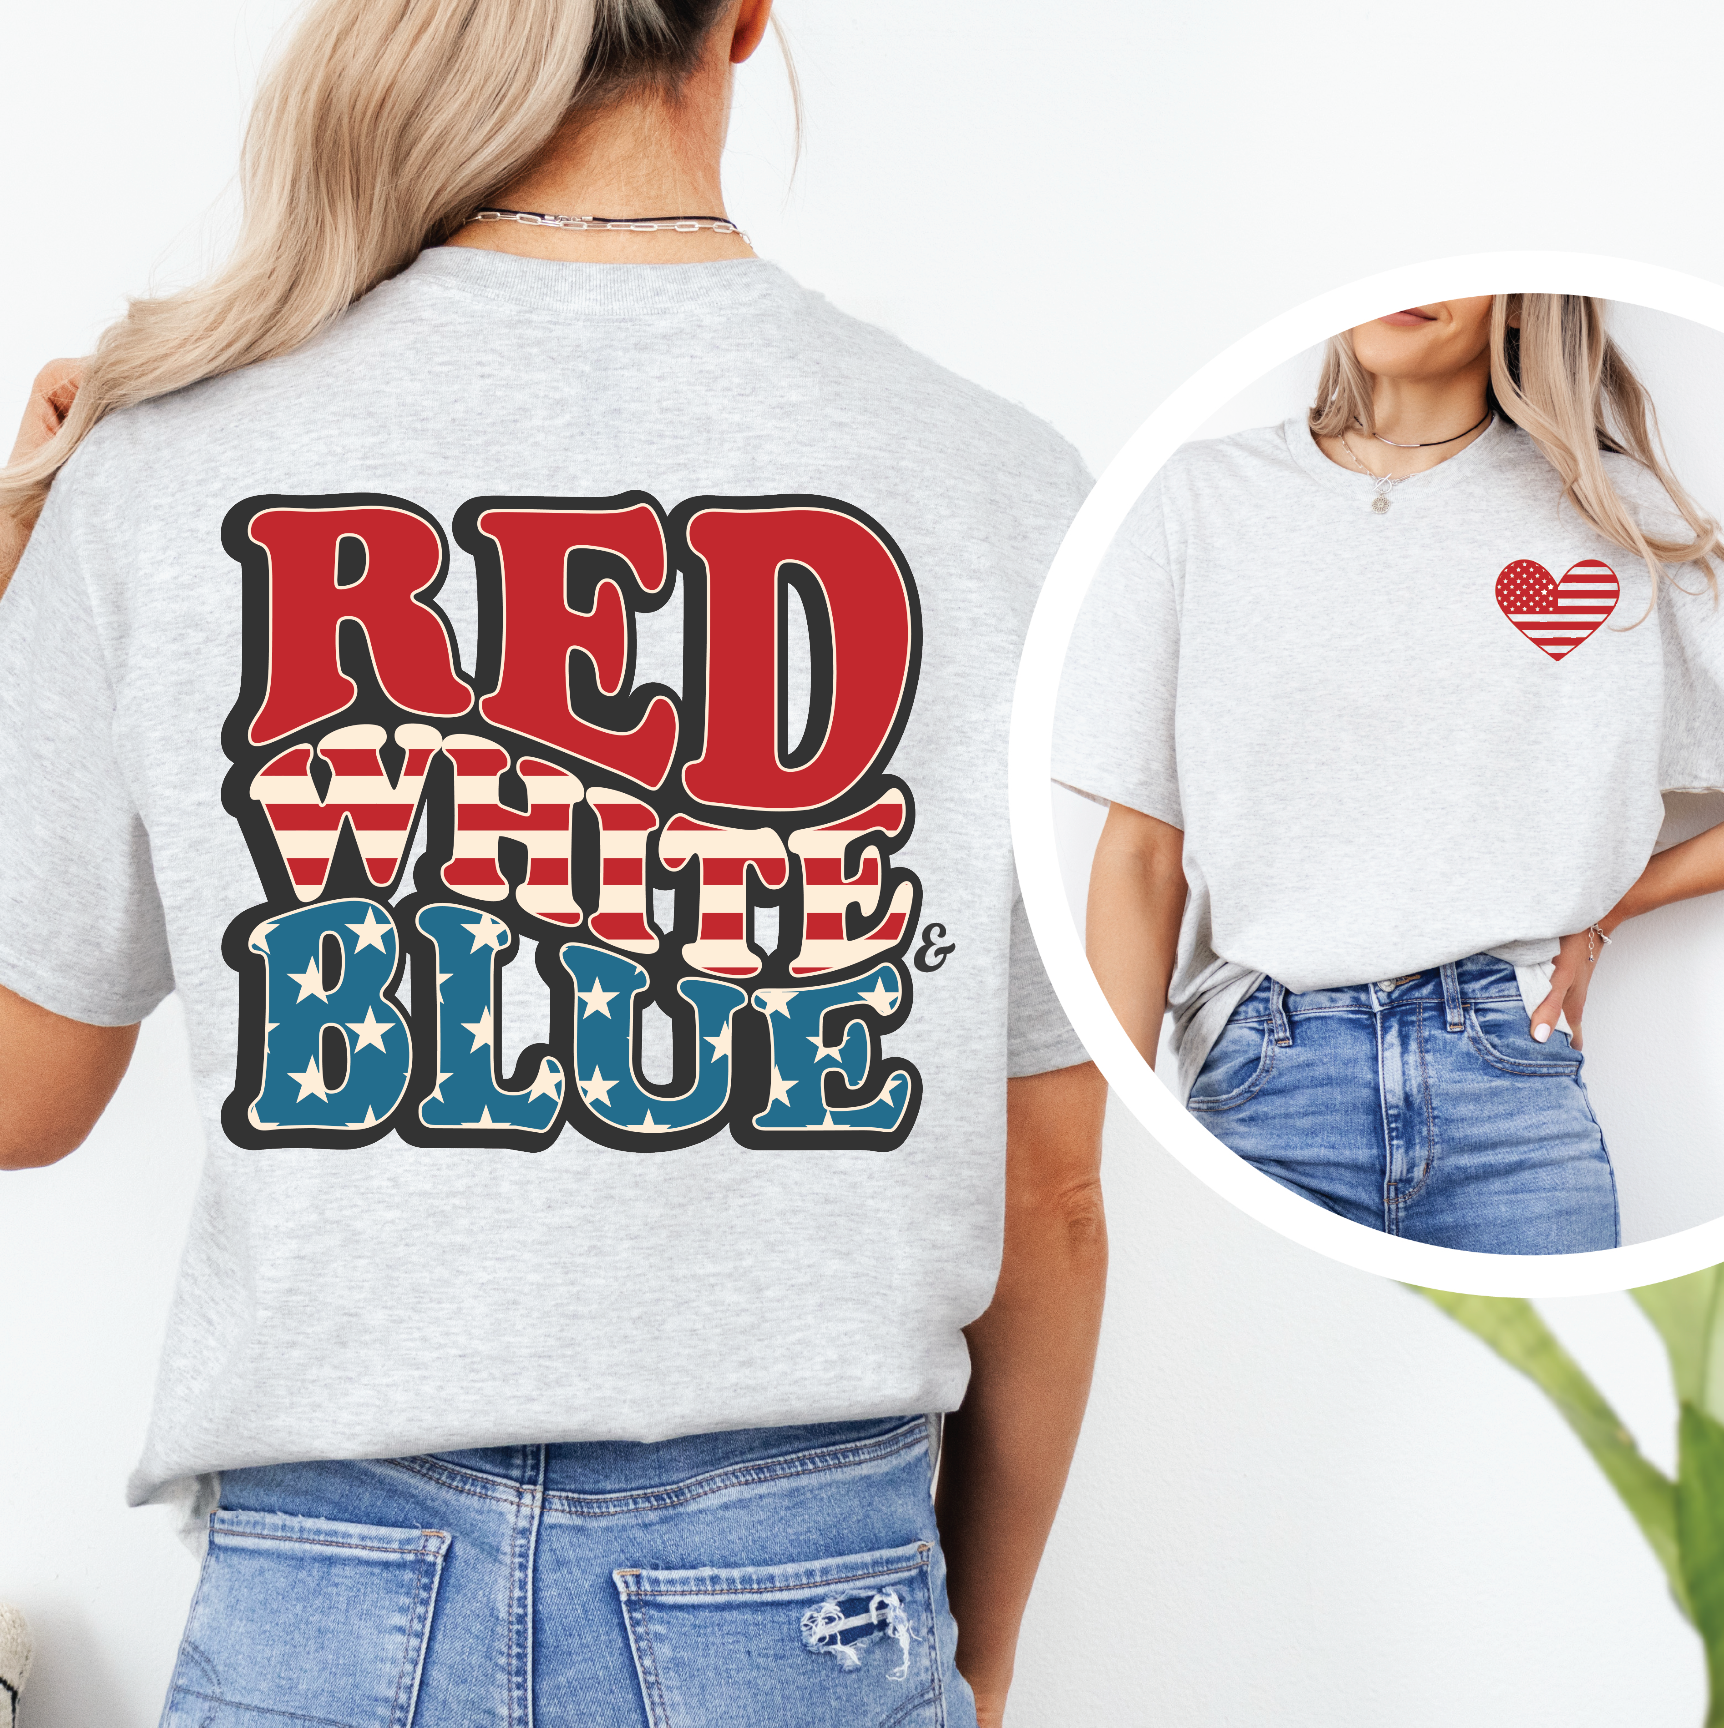 RED, WHITE & BLUE w/ Pocket Heart